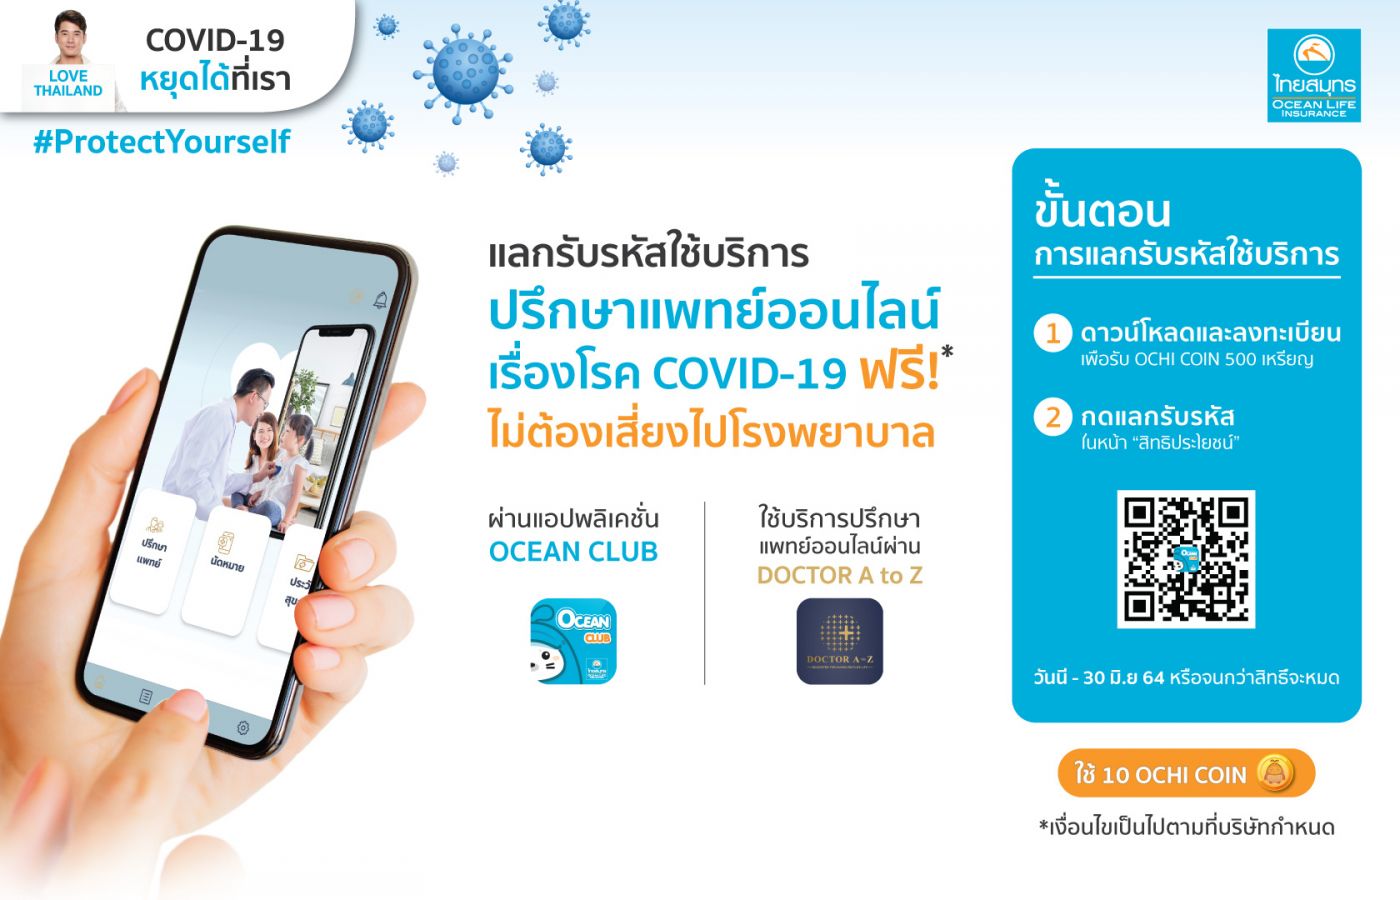 OCEAN LIFE ไทยสมุทร เปิดฟรี!! TELEMED ให้คนไทยปรึกษาแพทย์ออนไลน์เรื่อง COVID-19  ช่วยลดภาระบุคลากรการแพทย์ และเลี่ยงความเสี่ยงจากการไปโรงพยาบาล